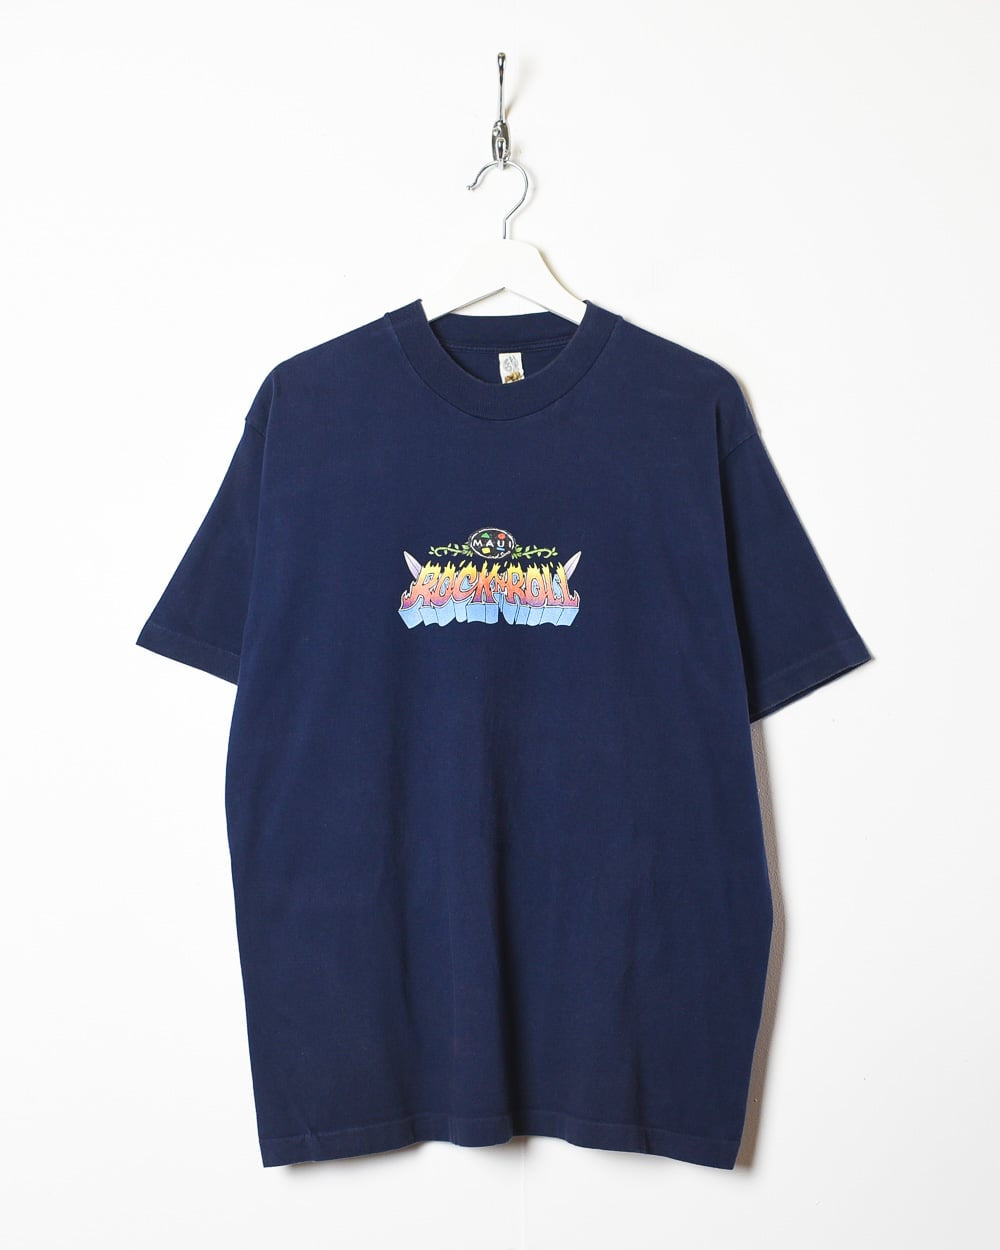 Navy Maui Rock & Roll T-Shirt - Large